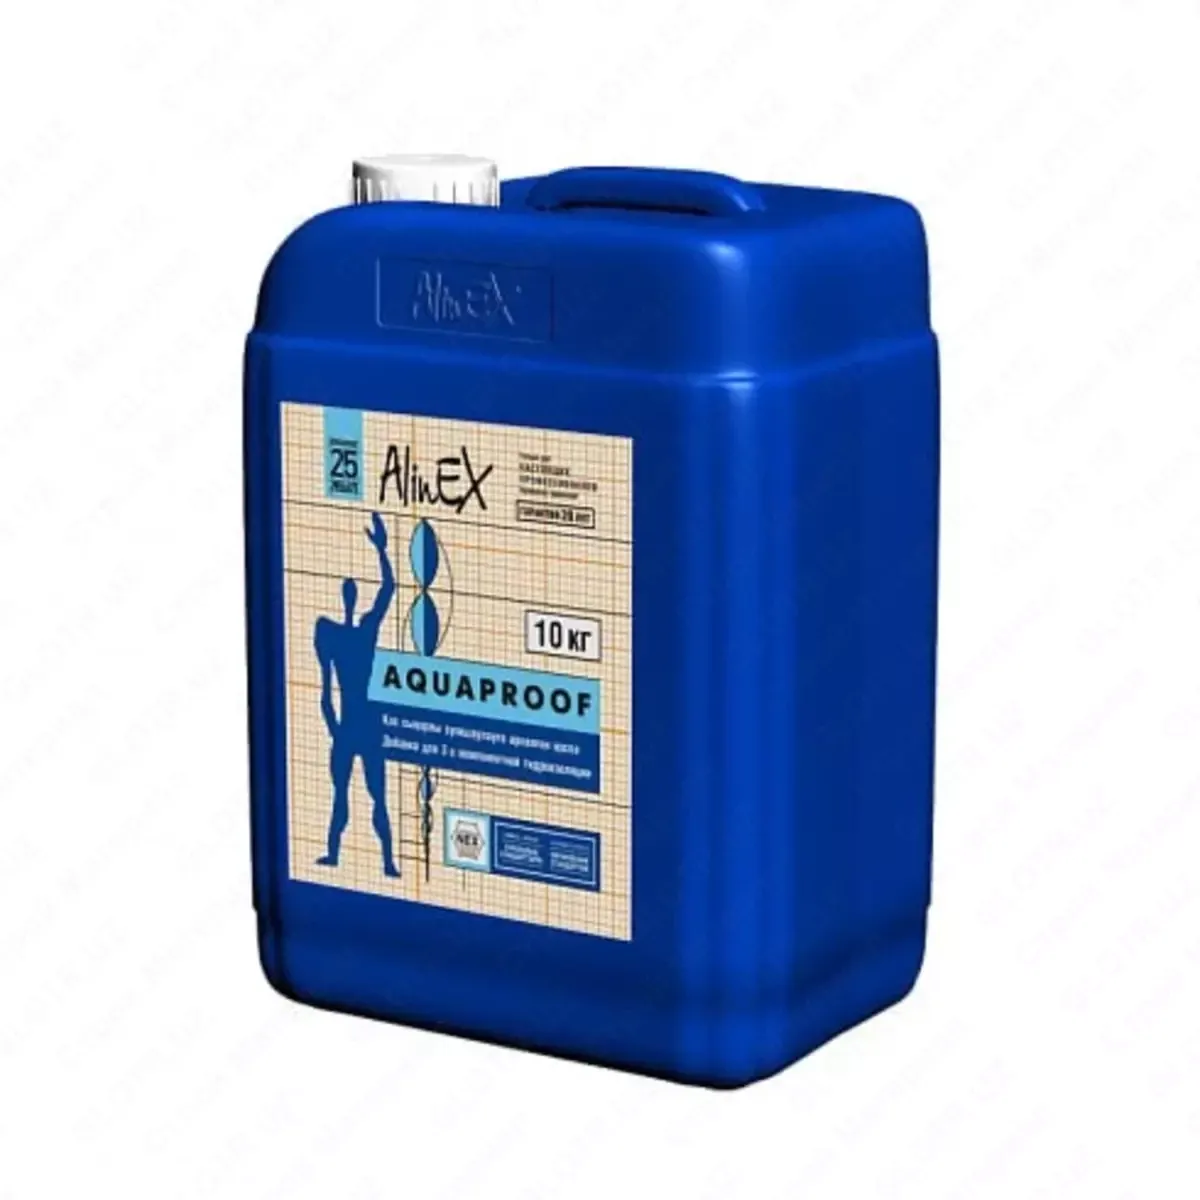 Гидроизоляция Aquaproof 25 кг+10 кг ALINEX#1